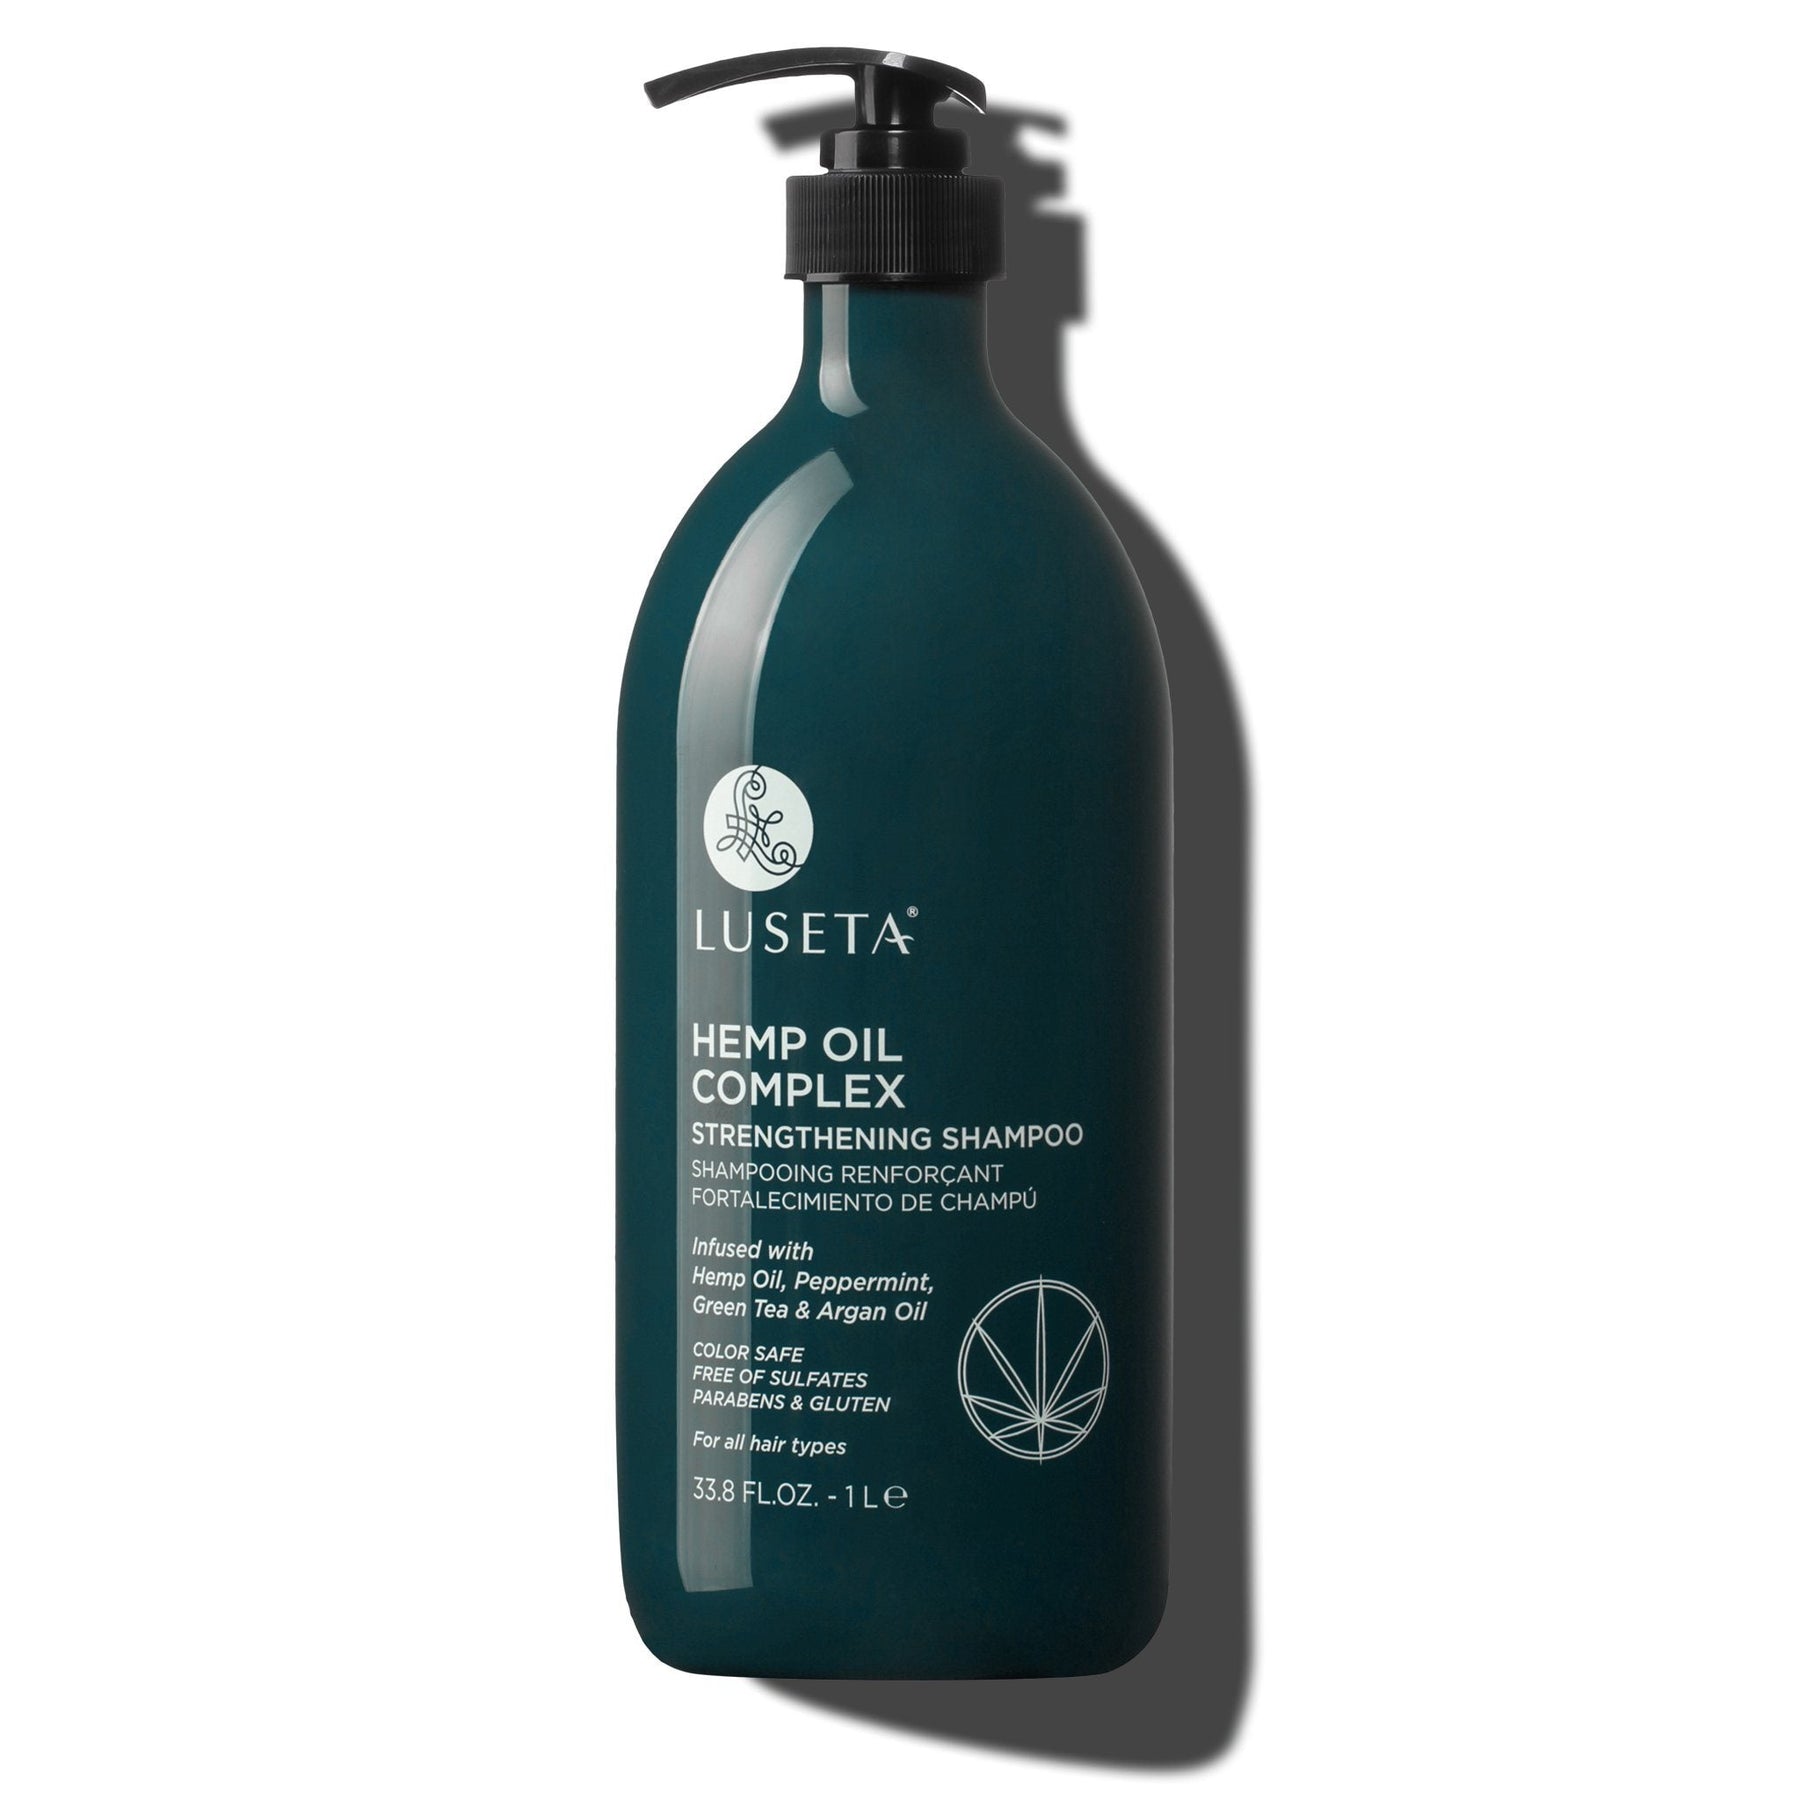 Hemp Oil Complex Strengthening Shampoo - 33.8oz - by Luseta Beauty |ProCare Outlet|